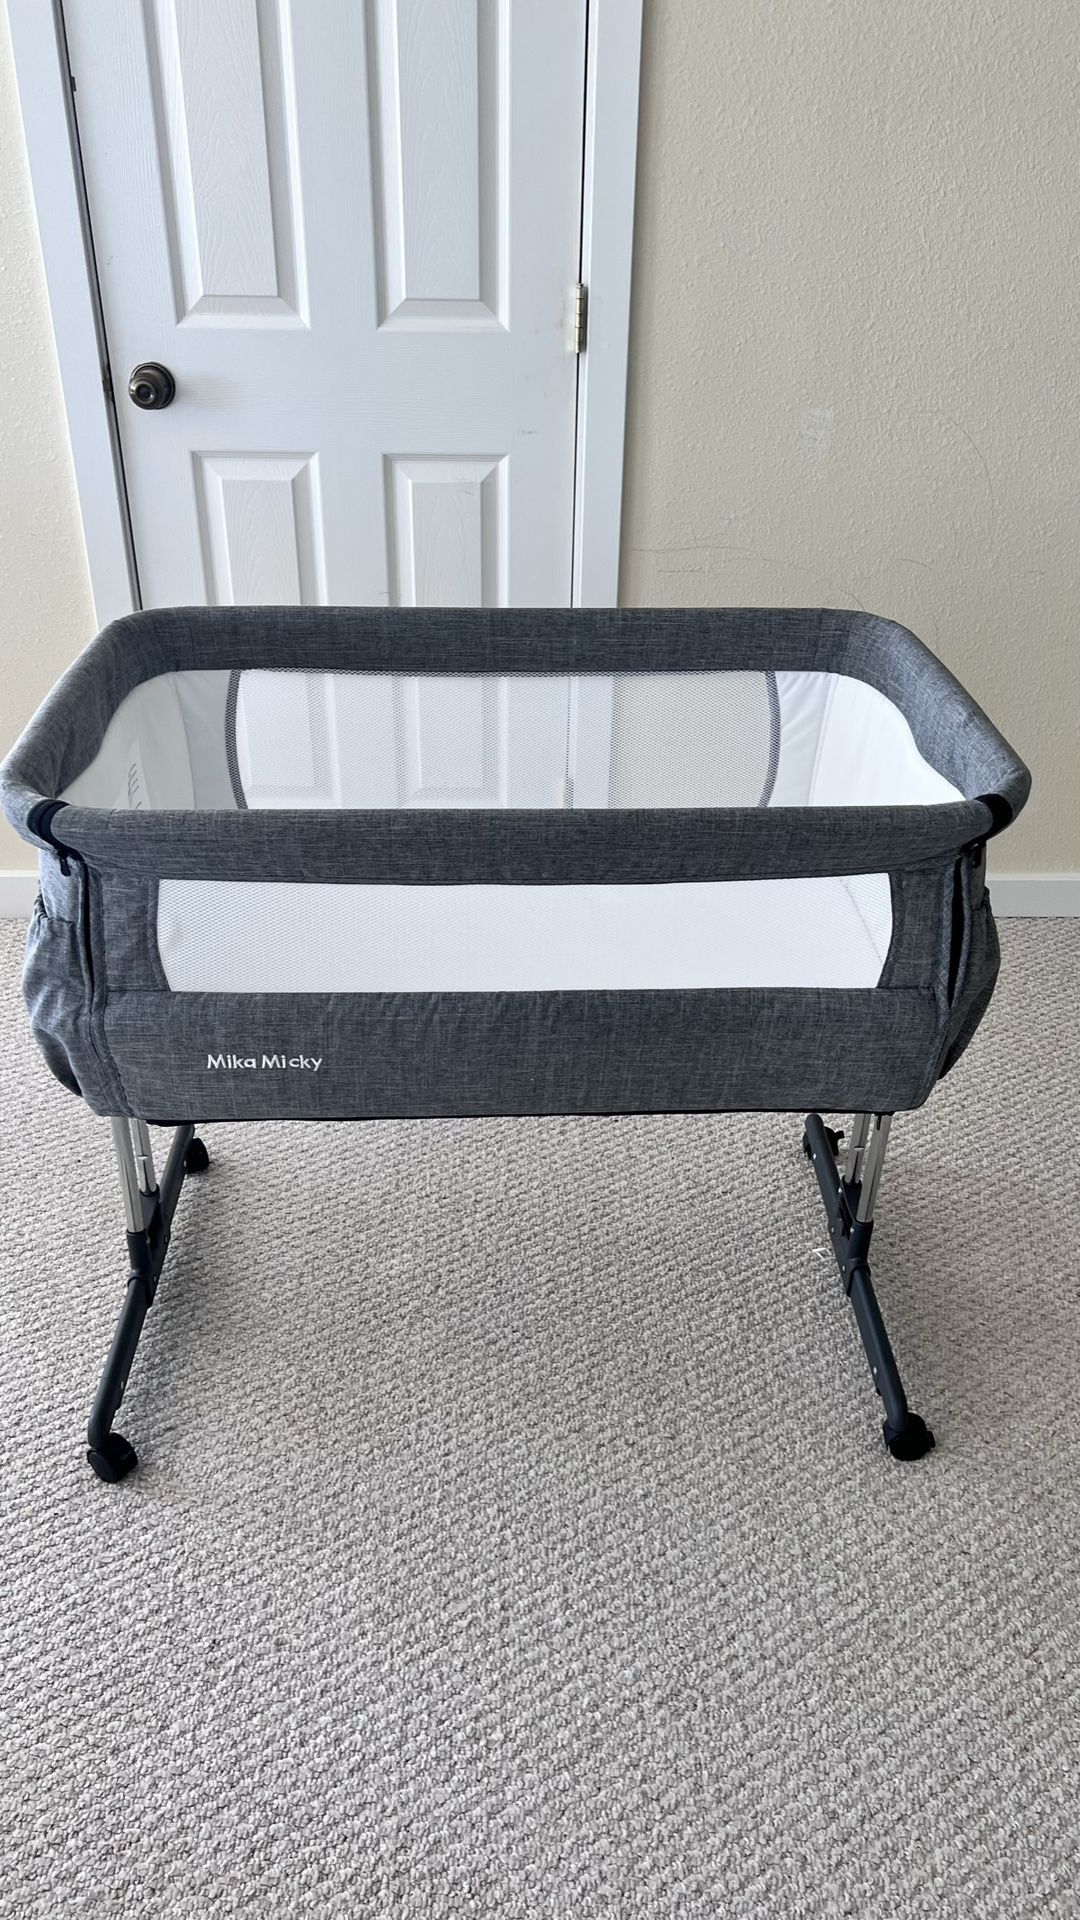  Mika Micky Bedside Sleeper Portable Crib -$115